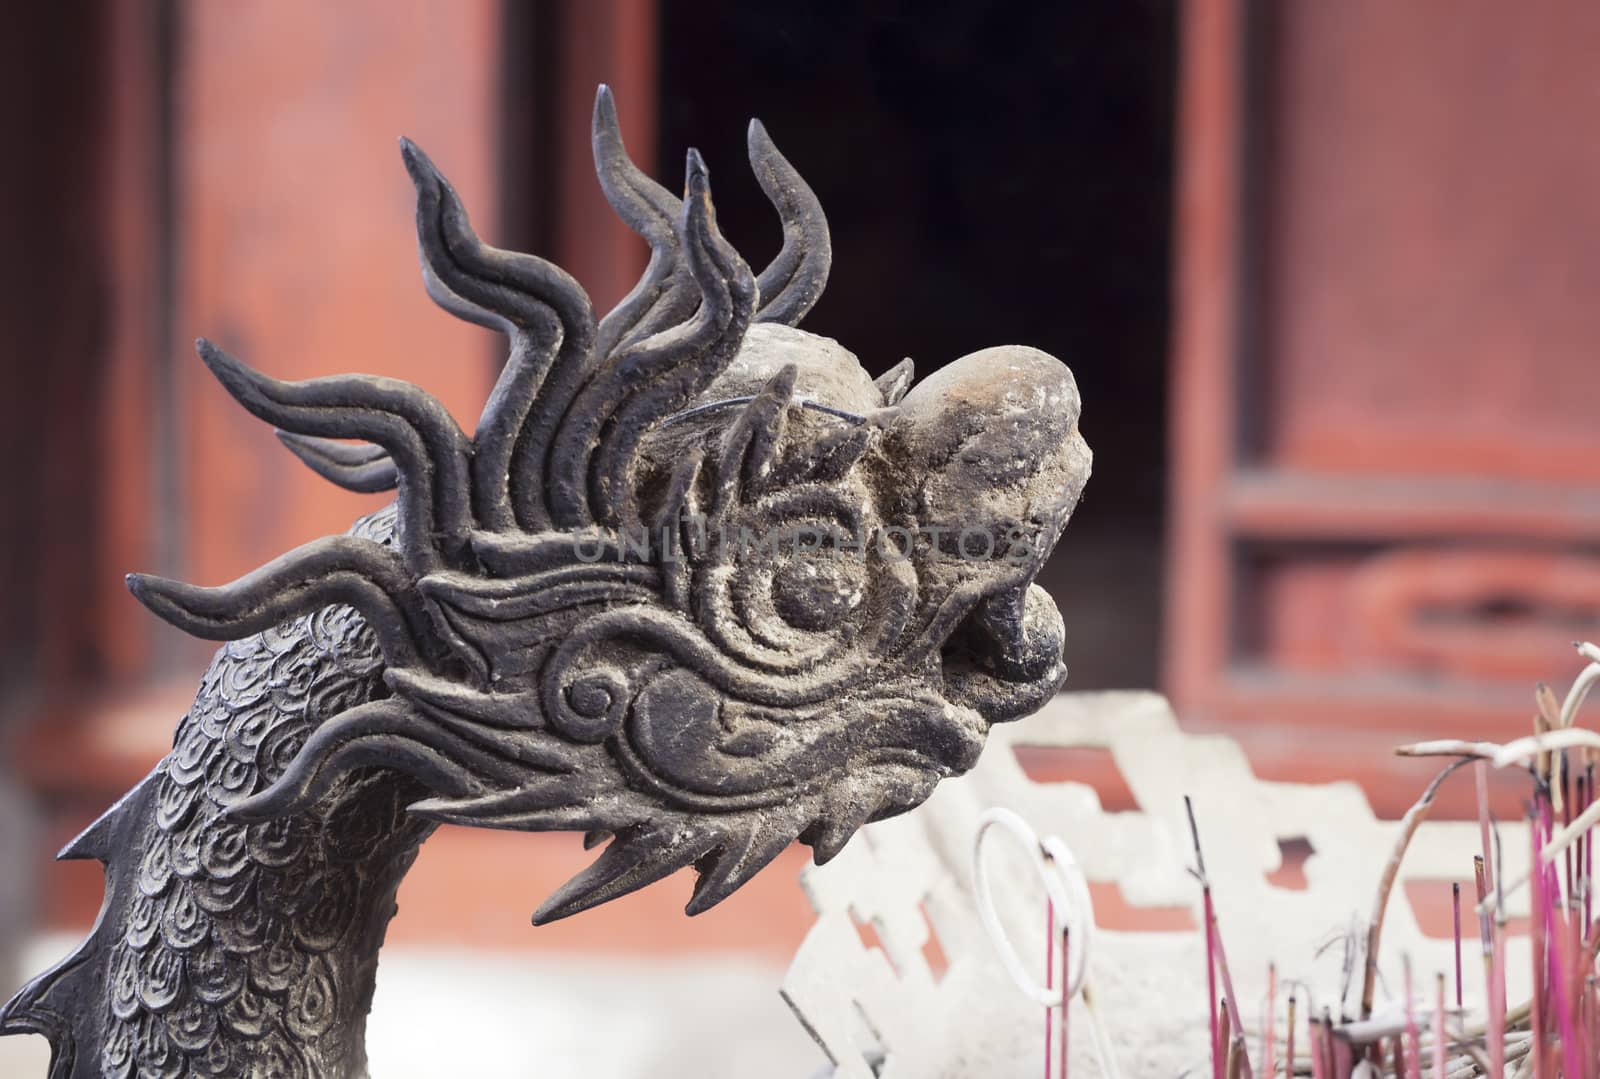 Metal dragon sculpture in a temple in Hanoi, Vietnam